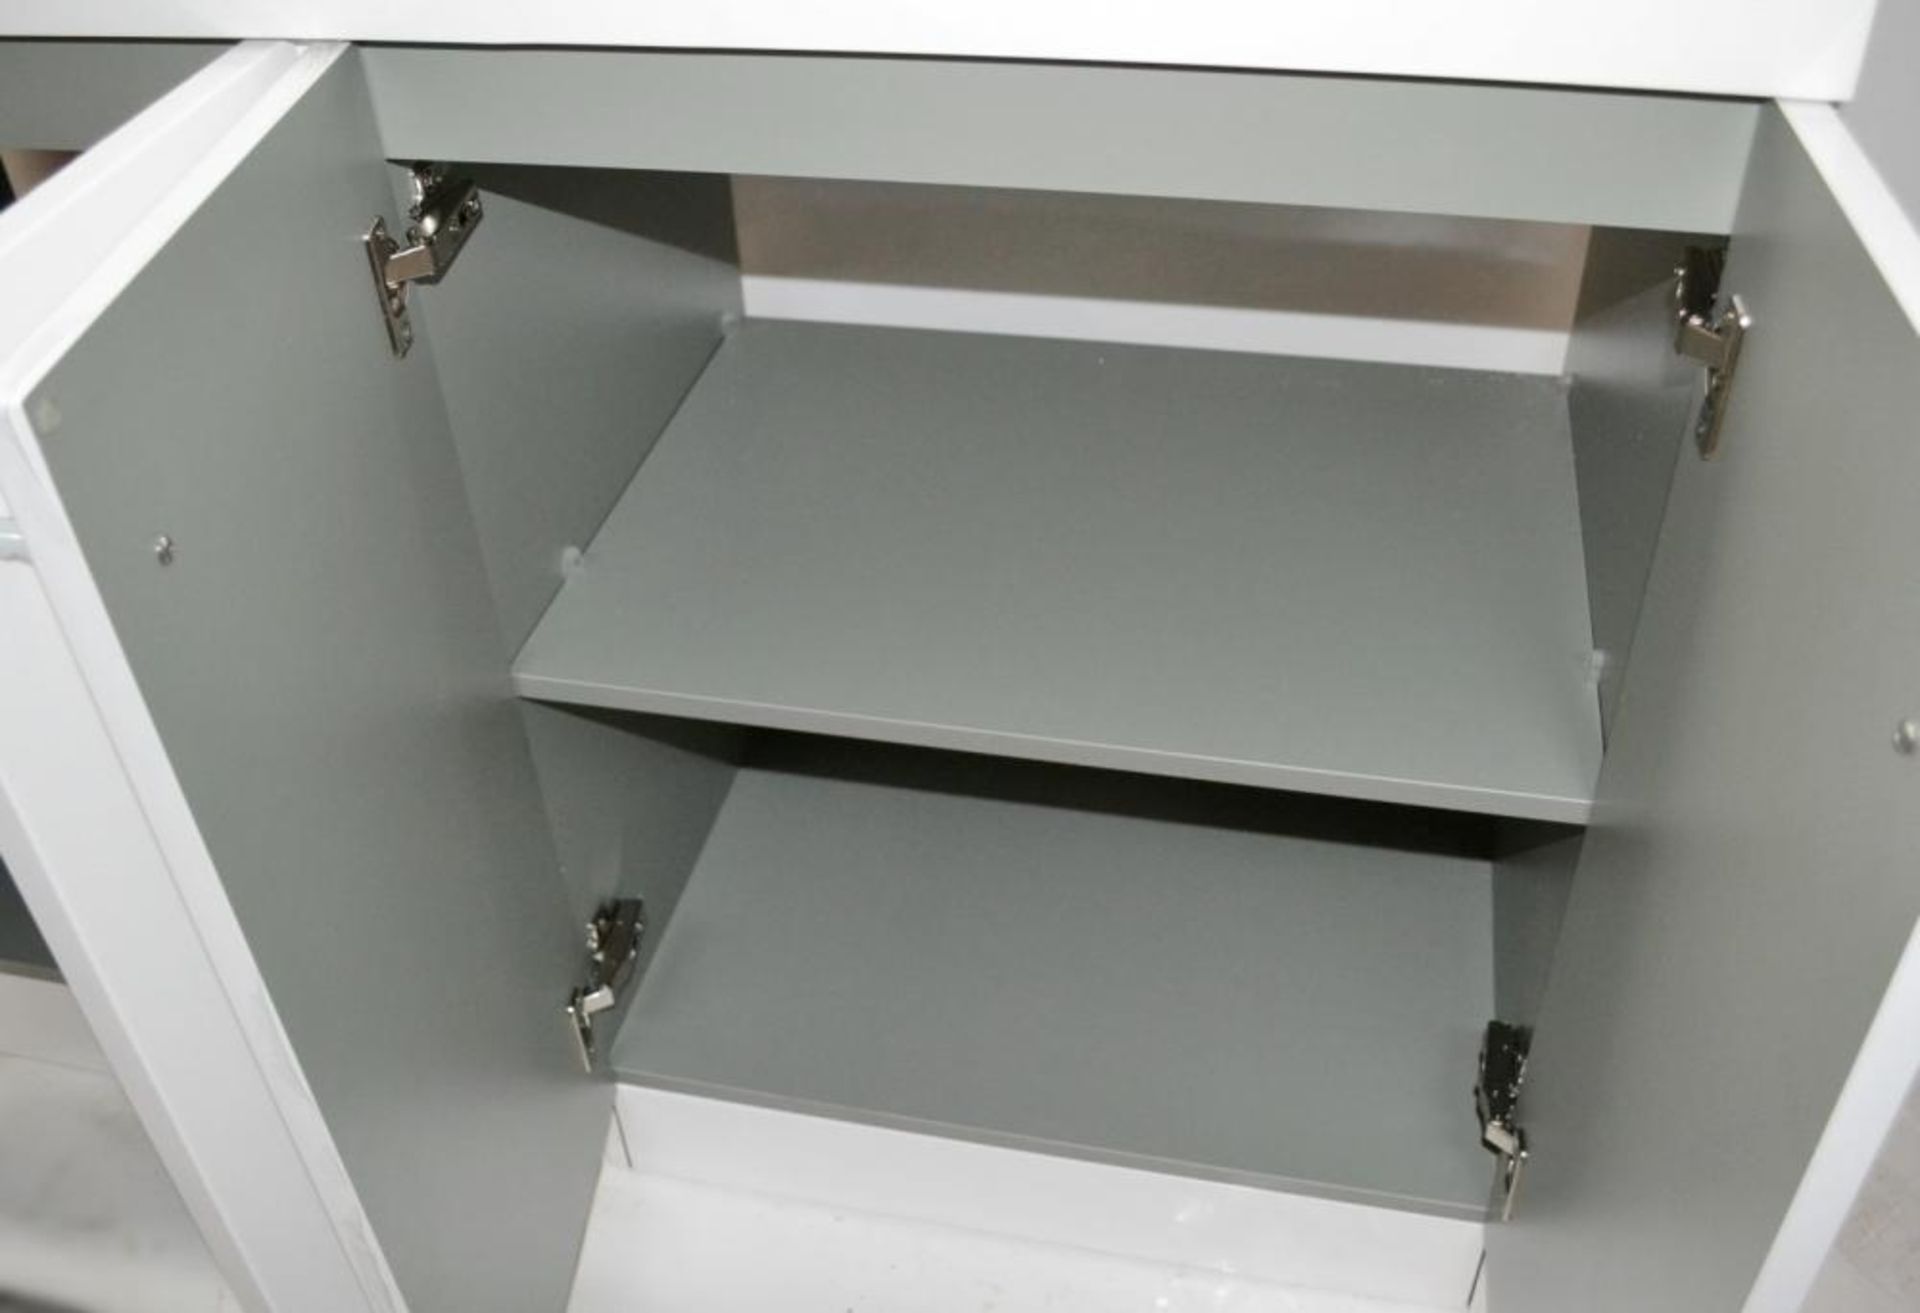 JOB LOT of 10 x Gloss White 1200mm 4-Door Double Basin Freestanding Bathroom Cabinets - New & - Image 6 of 7